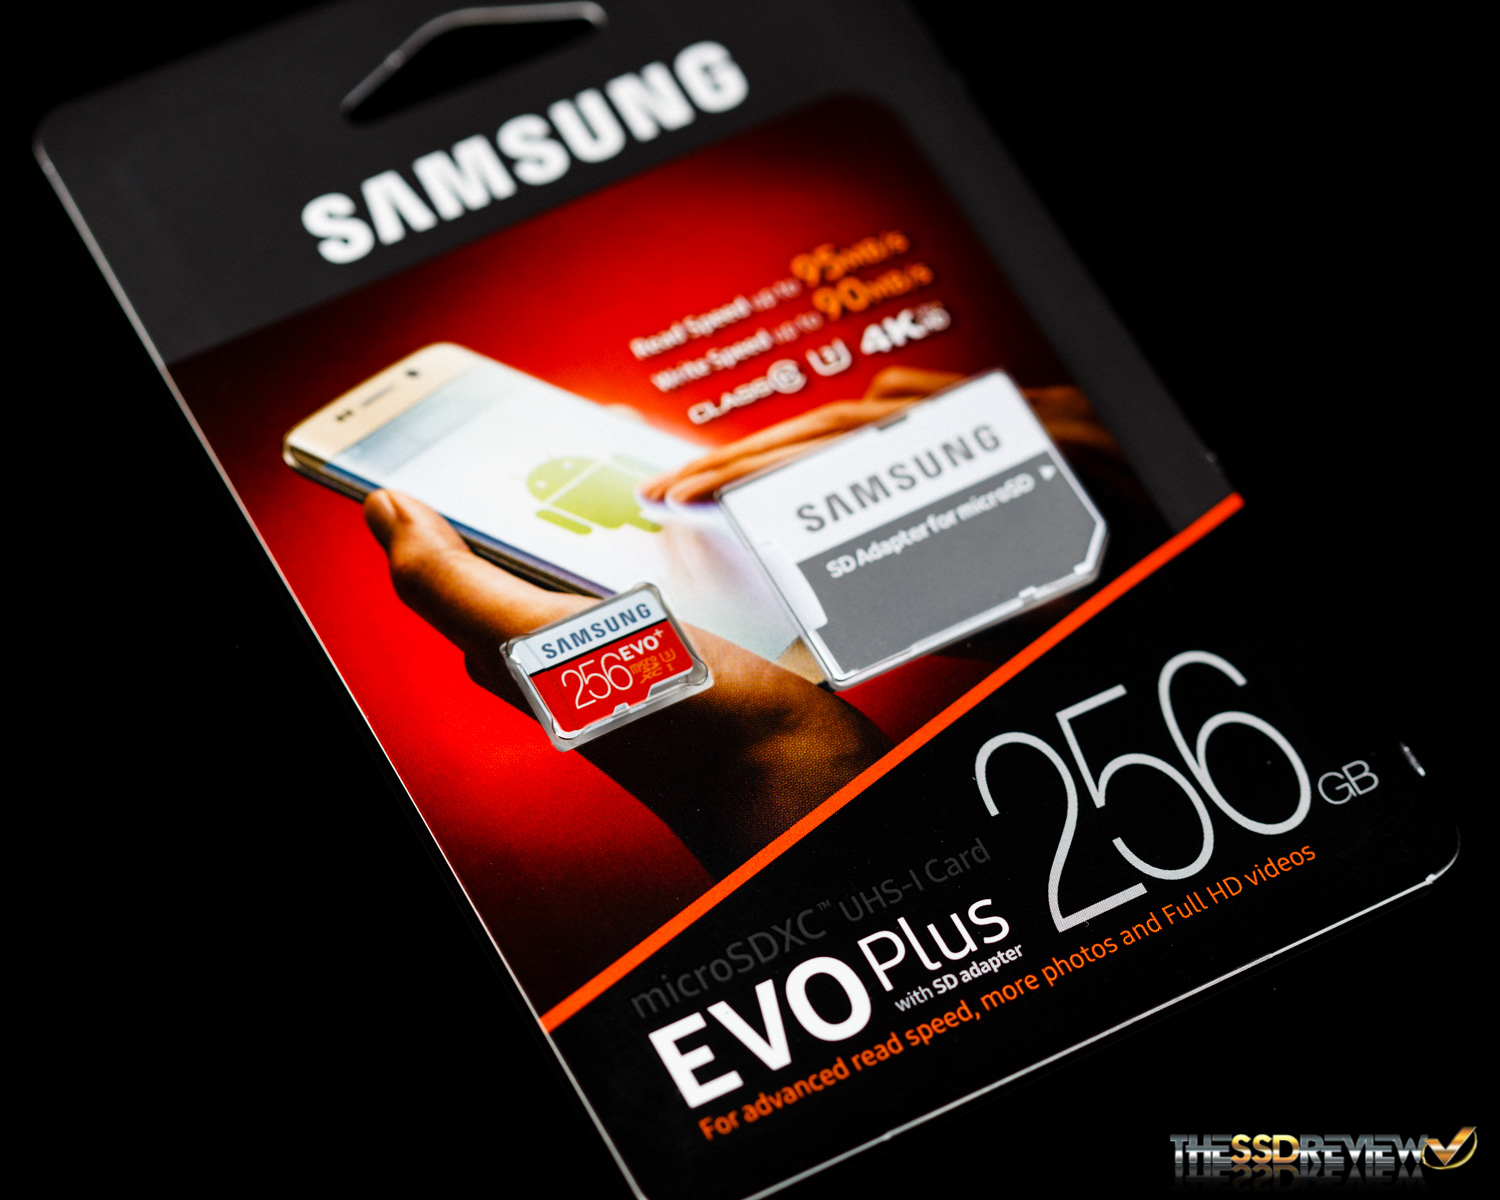 Microsd Samsung 256gb Evo Plus Mb Mc256haru